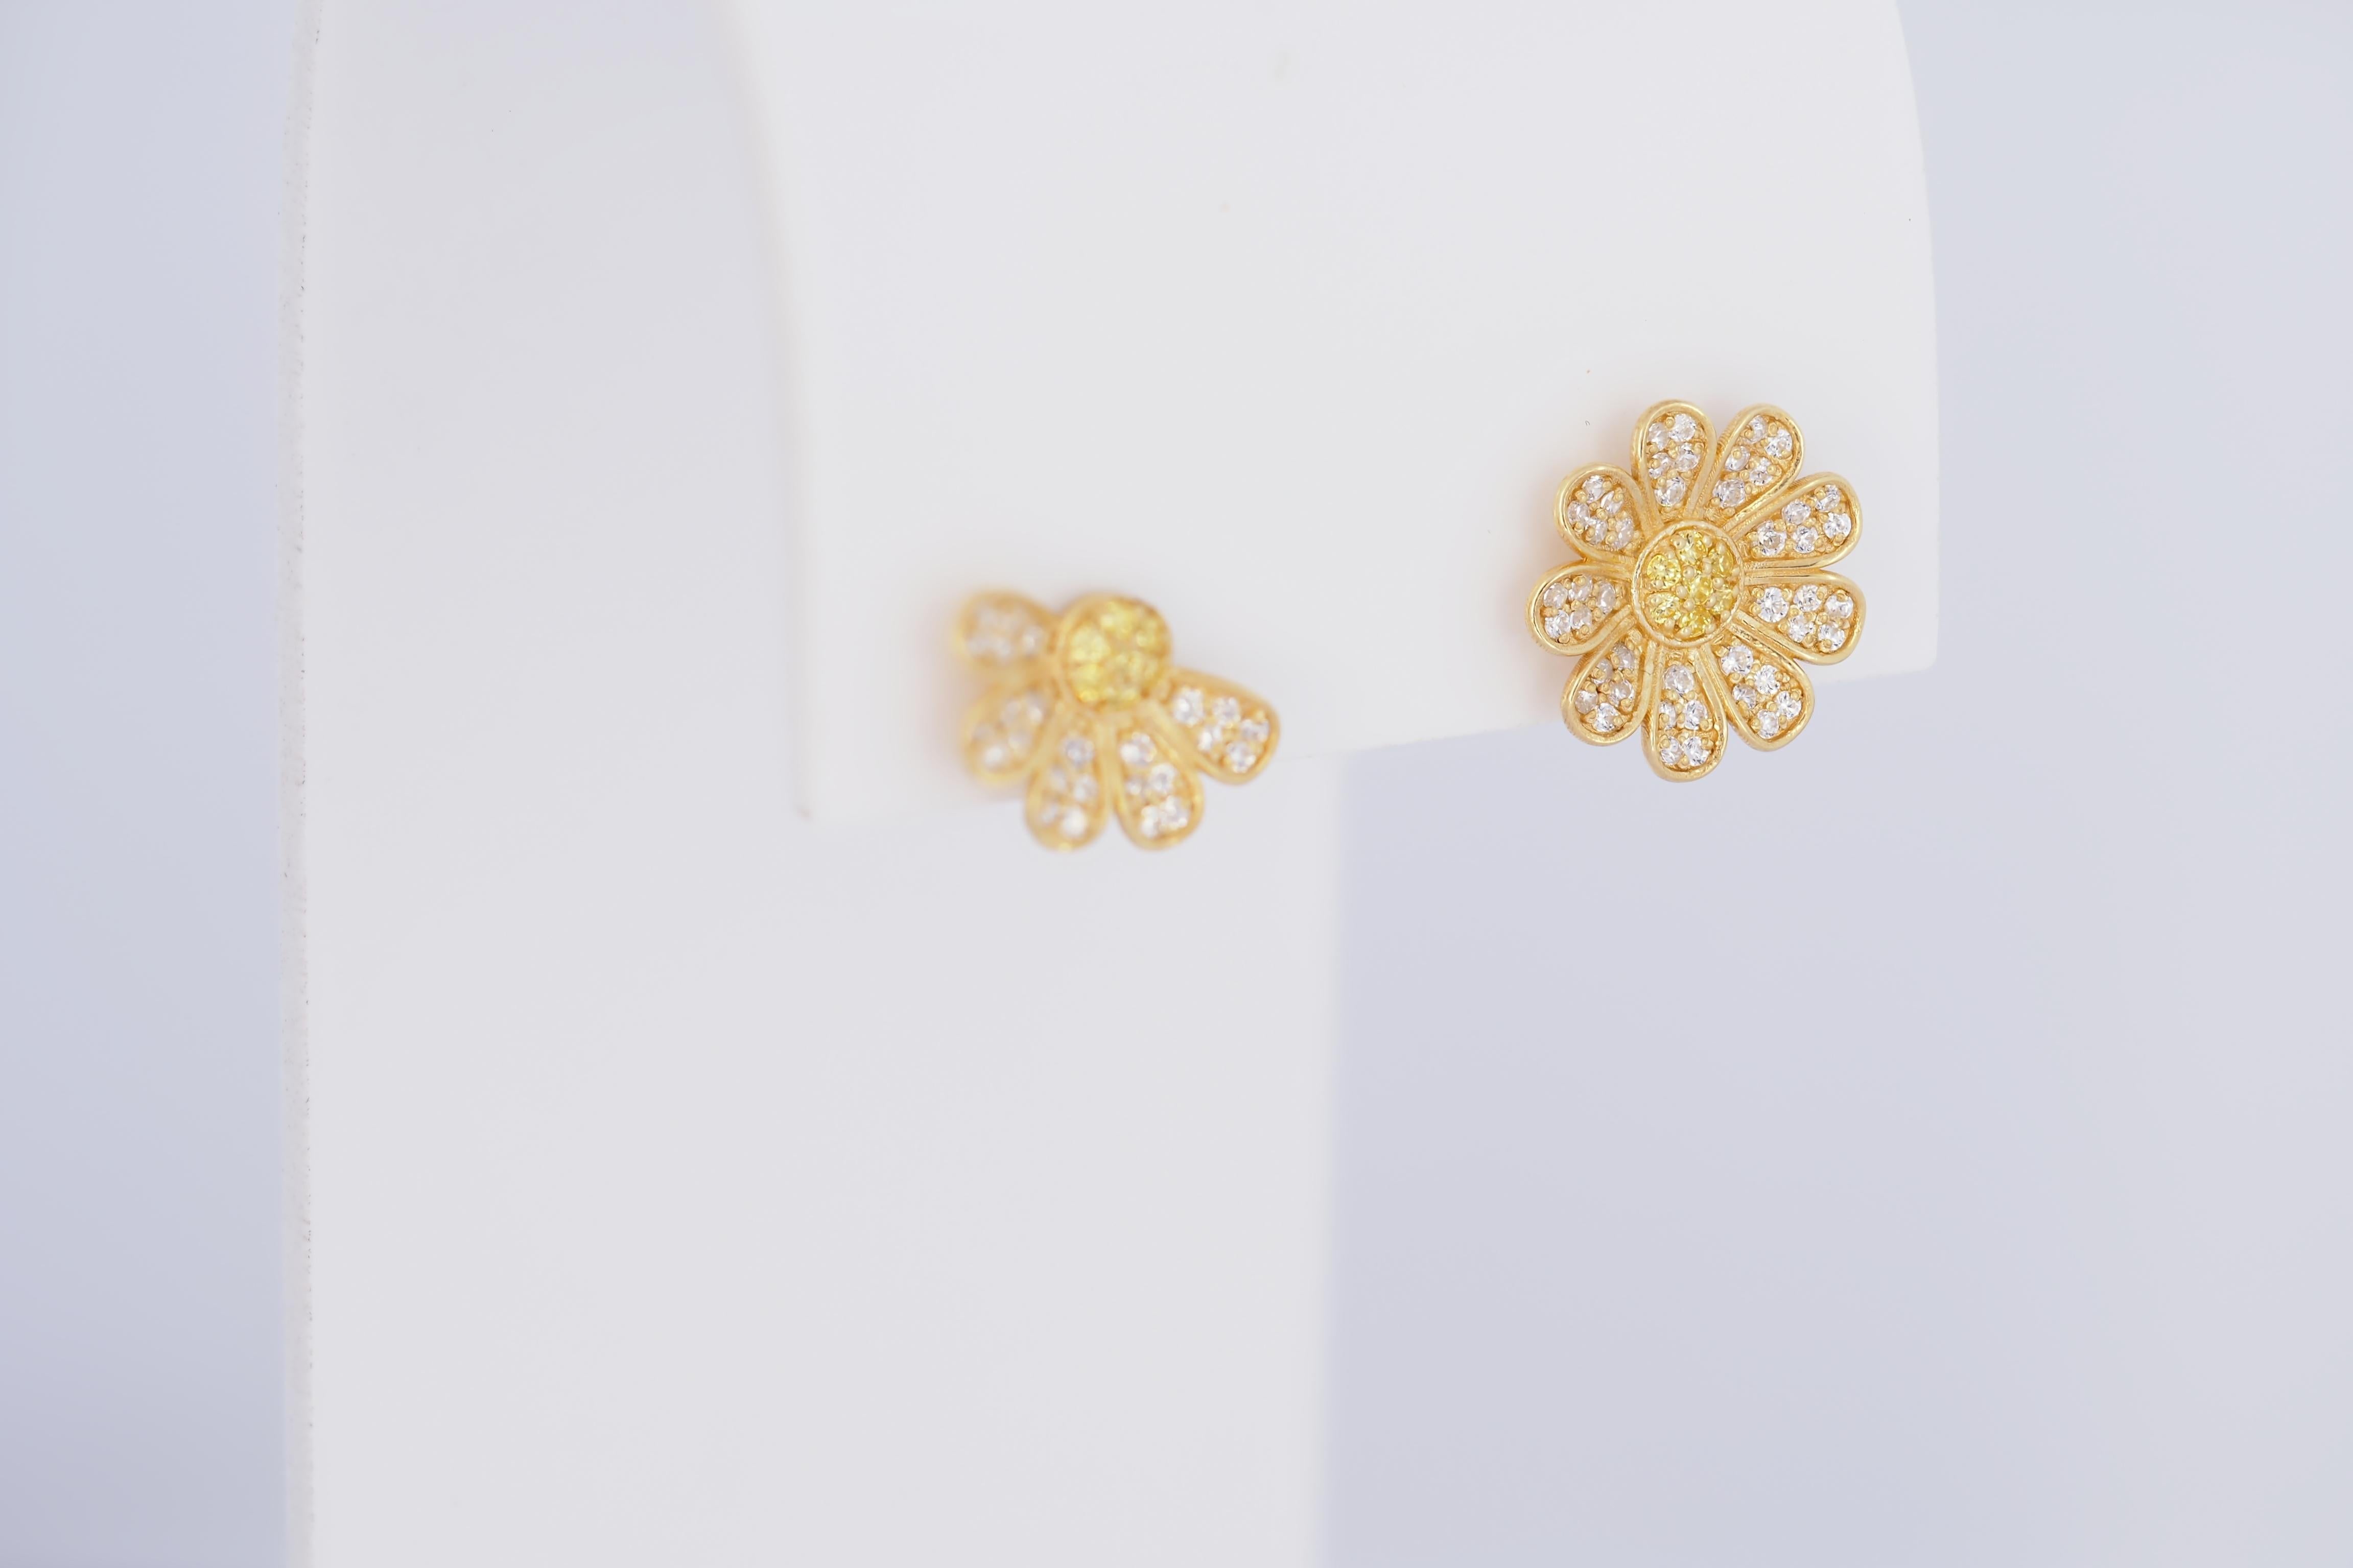 Daisy flower 14k gold ring and earrings set  For Sale 3